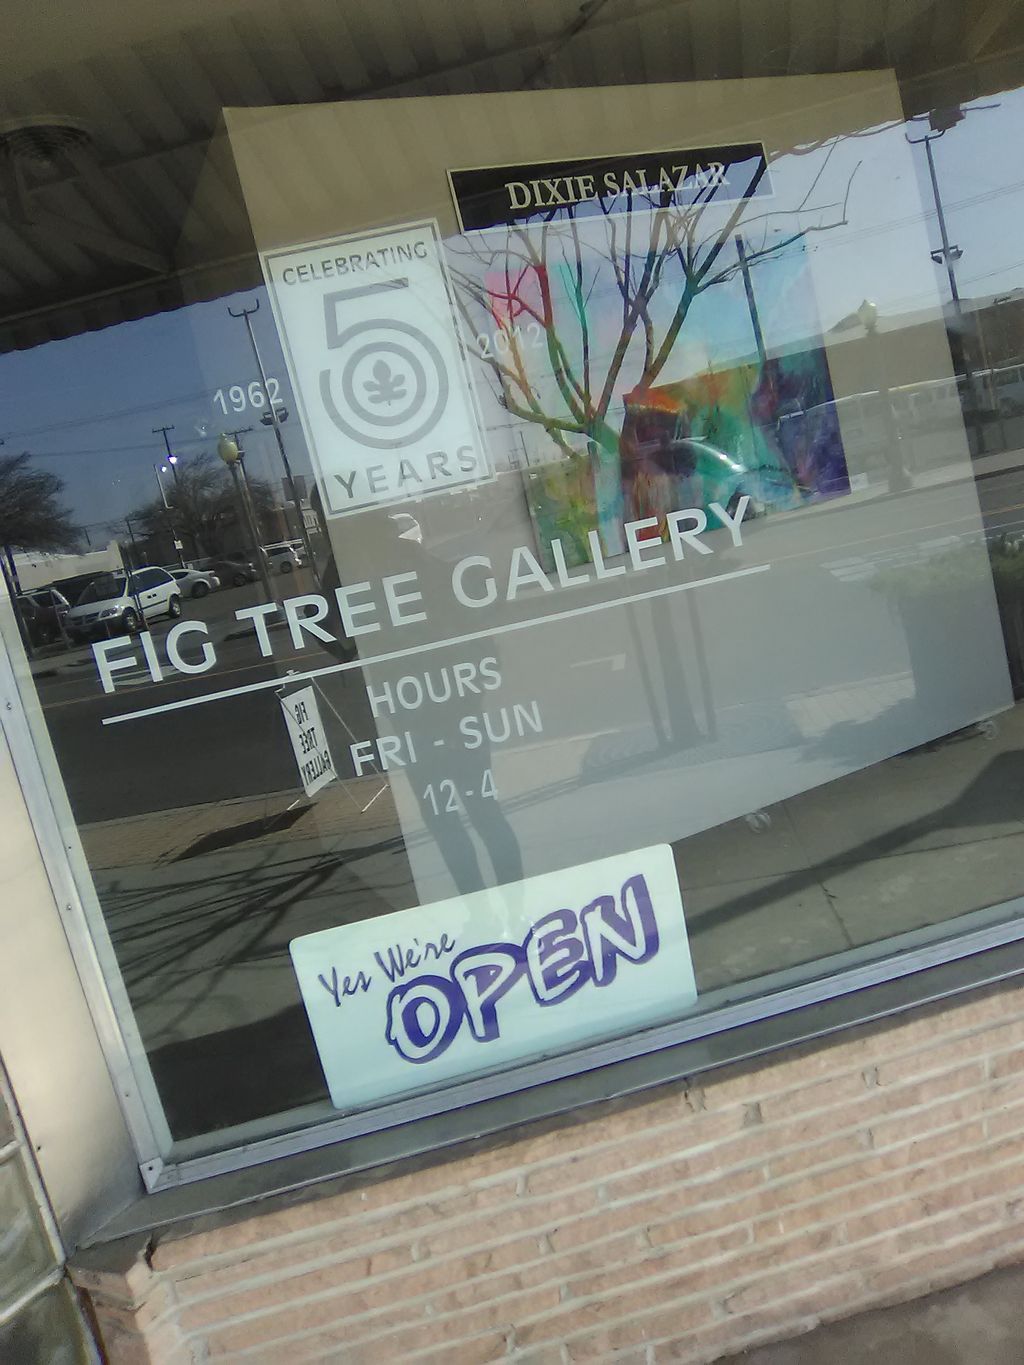 Fig Tree Gallery